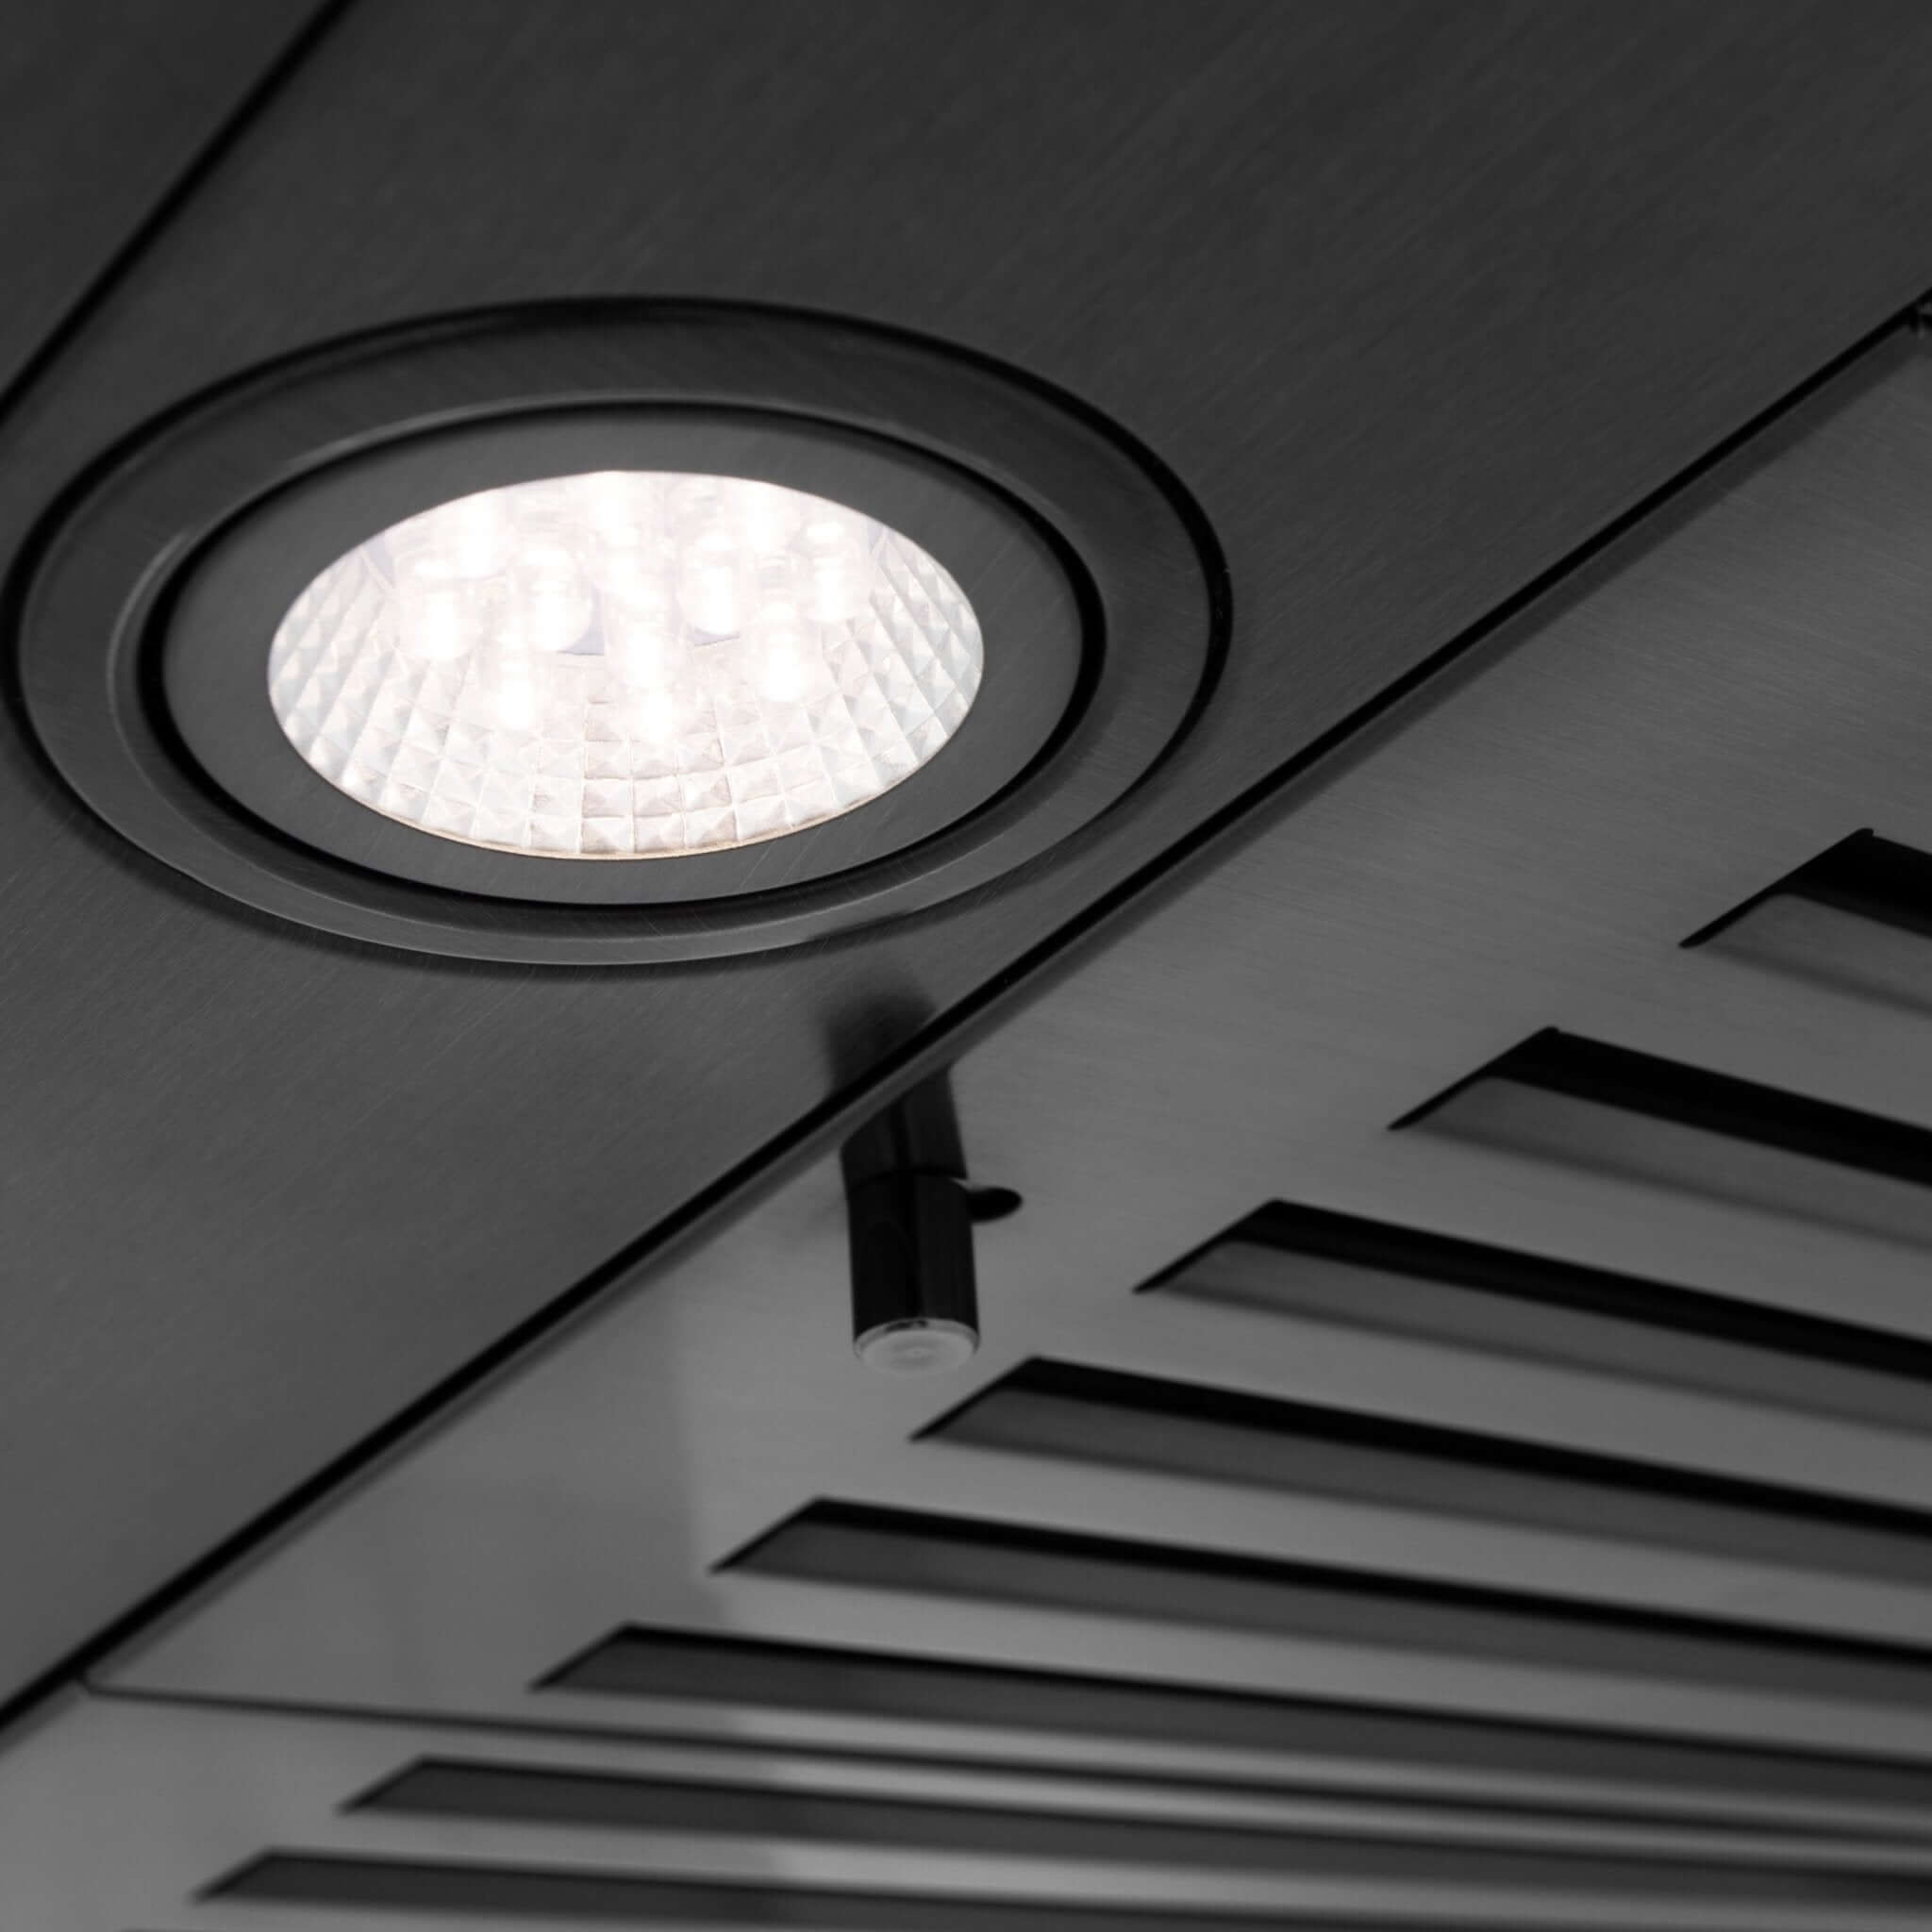 Built-in LED lighting on ZLINE BSKBN black stainless steel wall mount range hood close up.